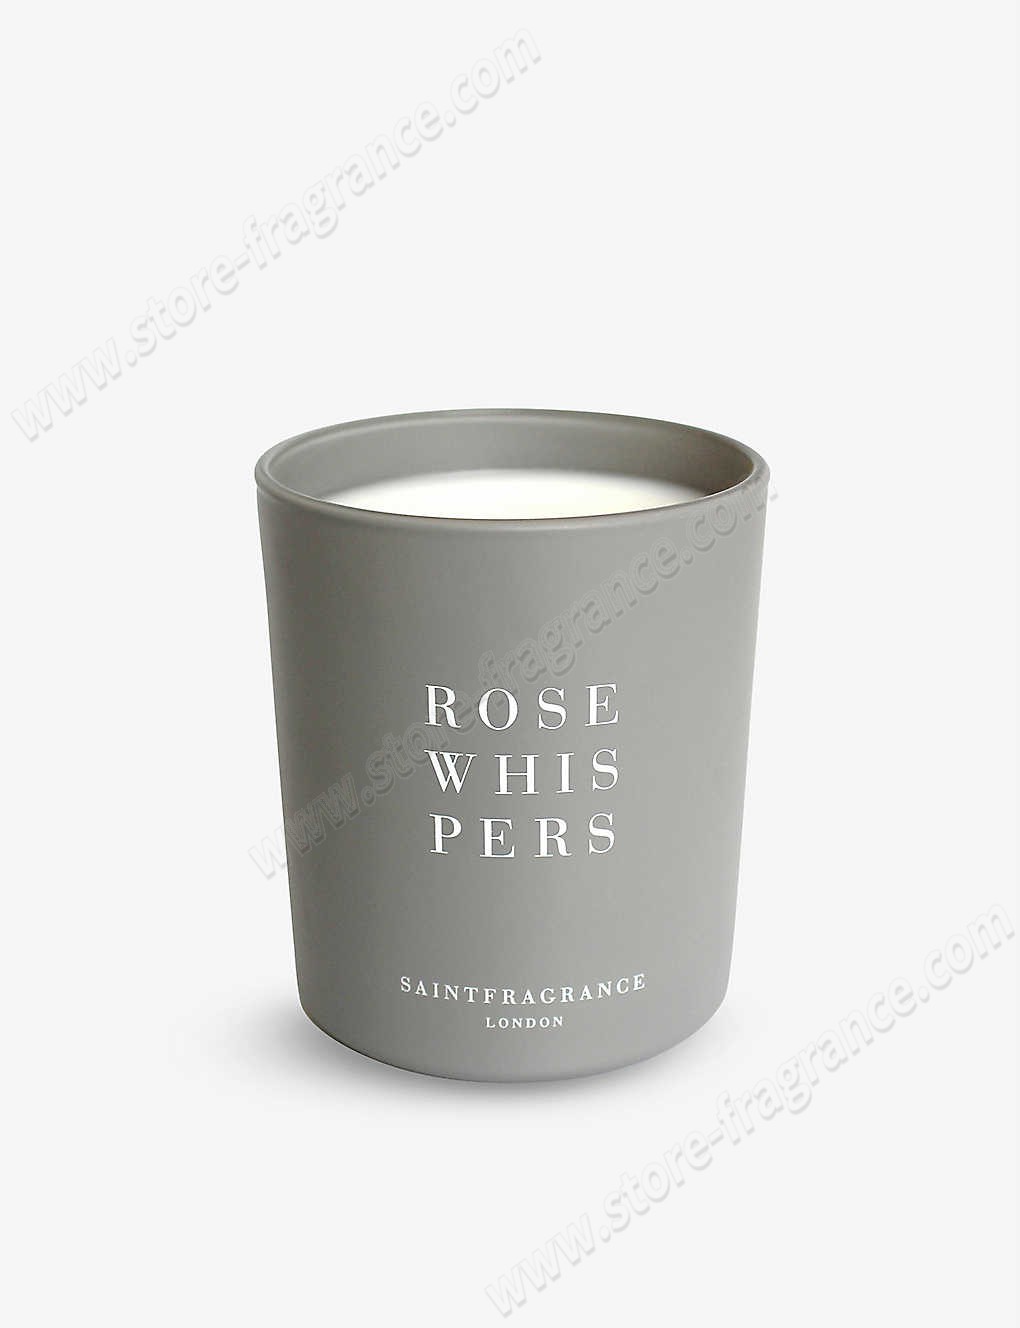 SAINT FRAGRANCE LONDON/Rose Whispers scented candle 200g ✿ Discount Store - SAINT FRAGRANCE LONDON/Rose Whispers scented candle 200g ✿ Discount Store